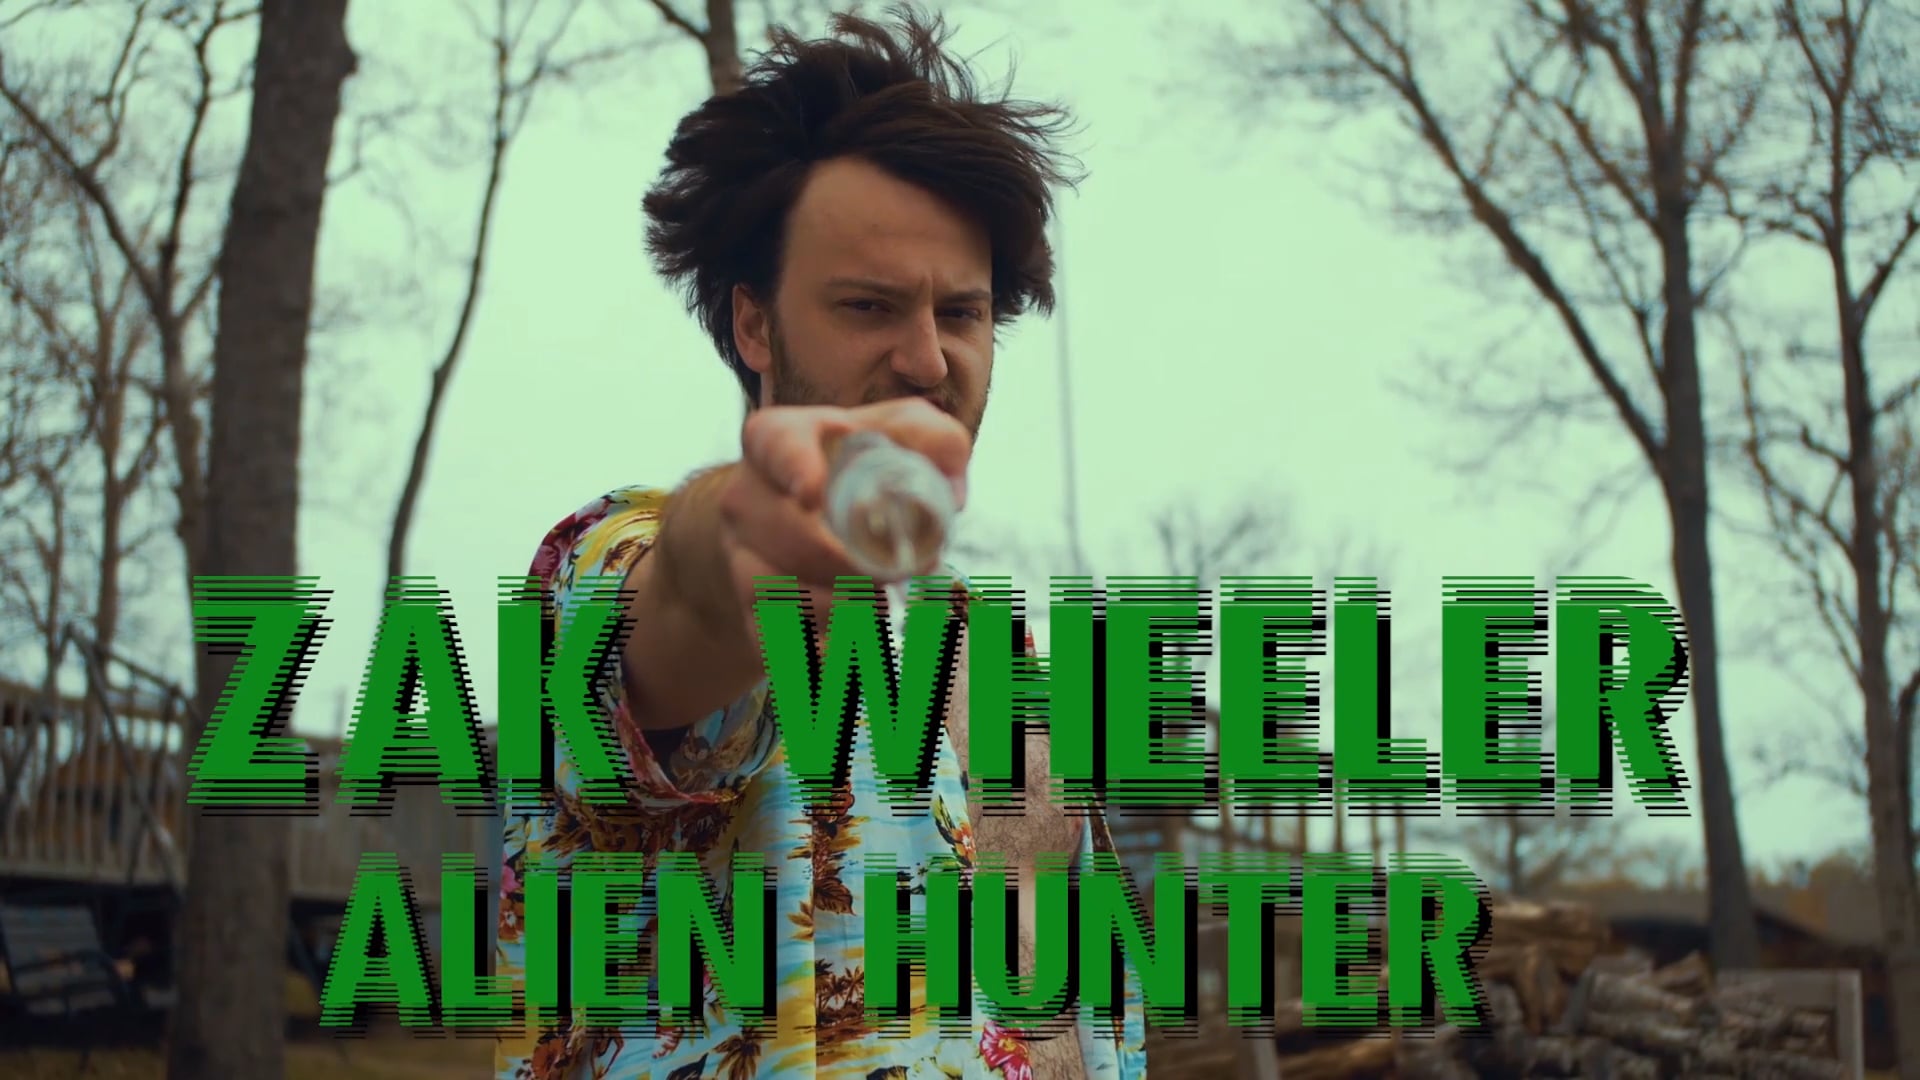 041-2019-Darn Good Lima Beans-Zak Wheeler: Alien Hunter